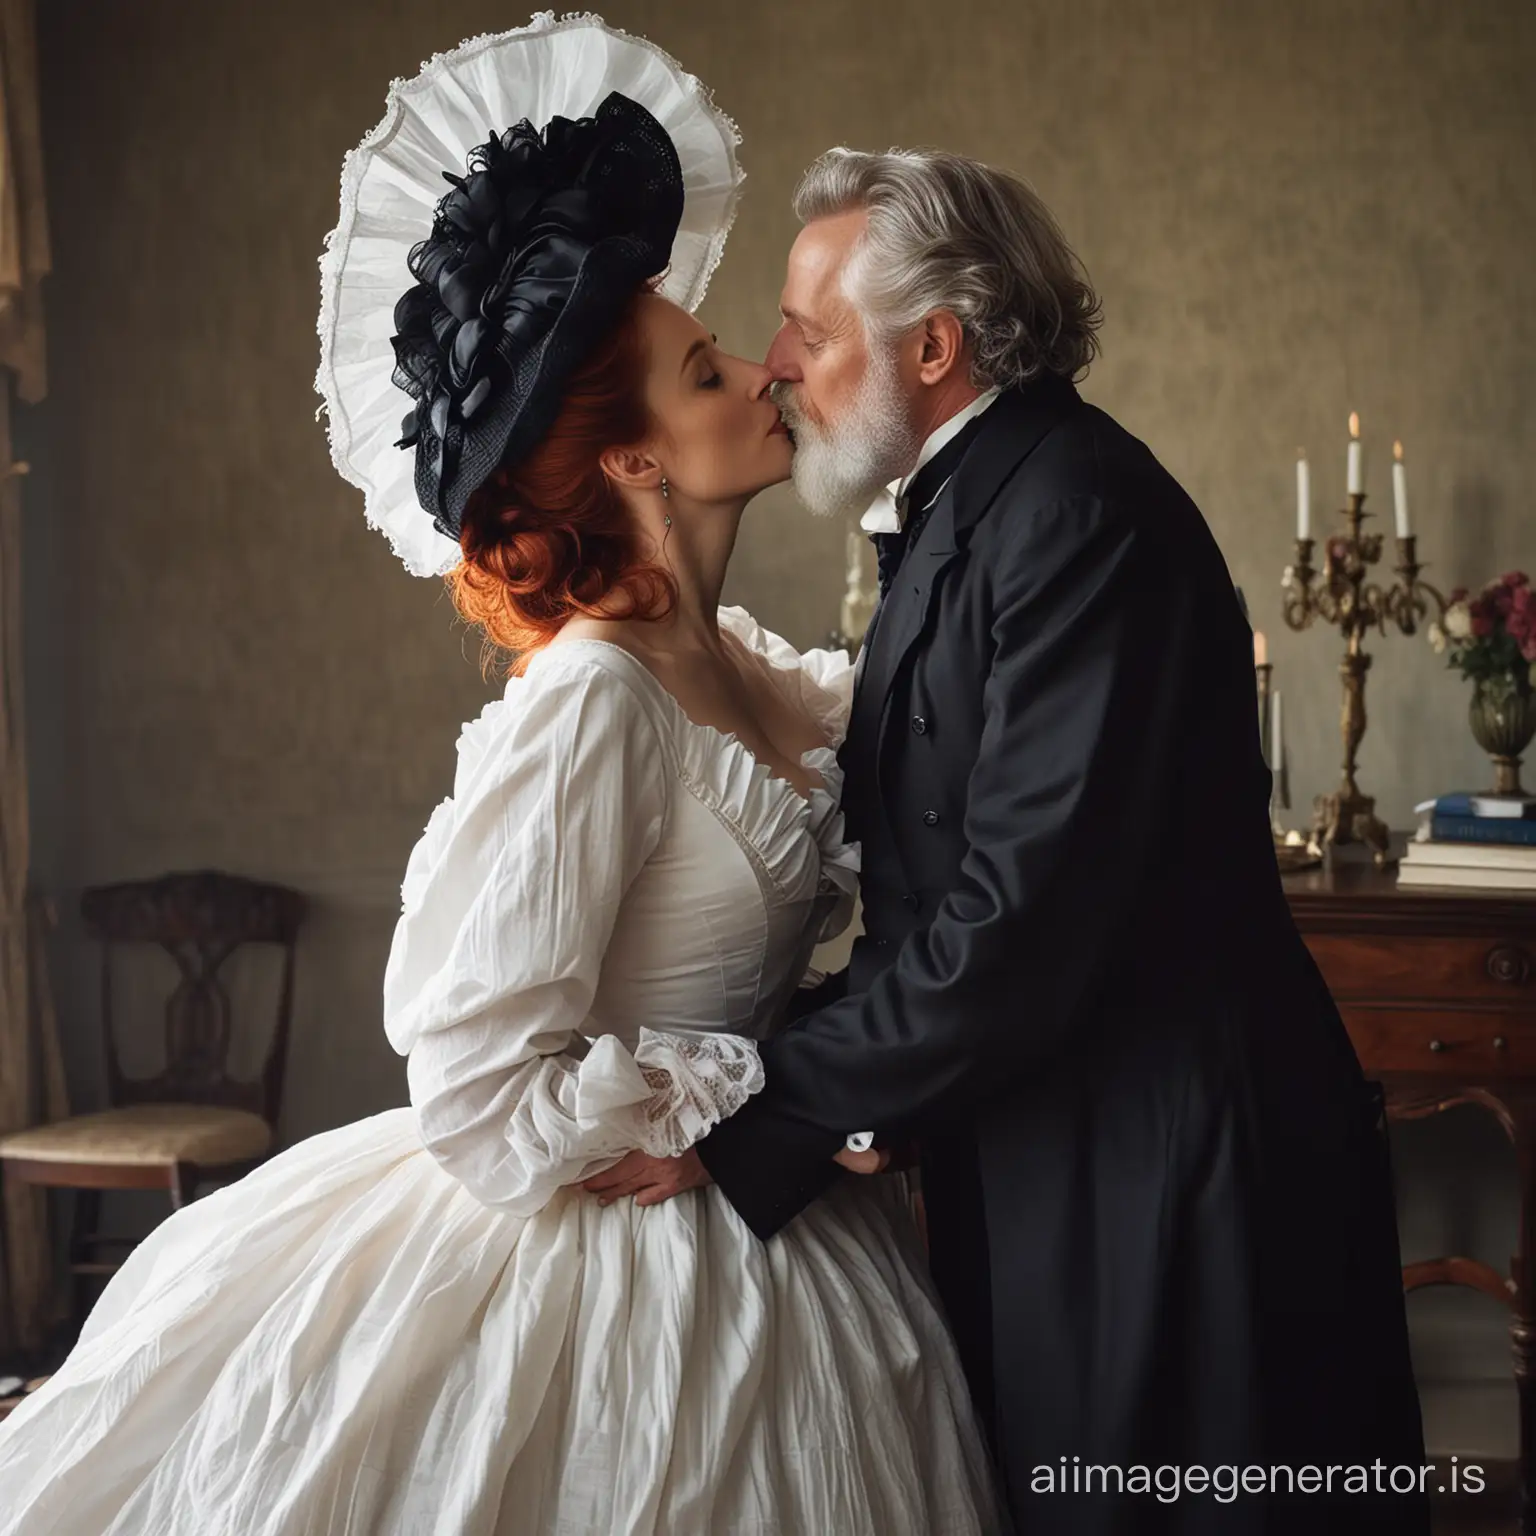 Romantic-RedHaired-Victorian-Bride-Kissing-Groom-in-Poofy-Black-Crinoline-Dress